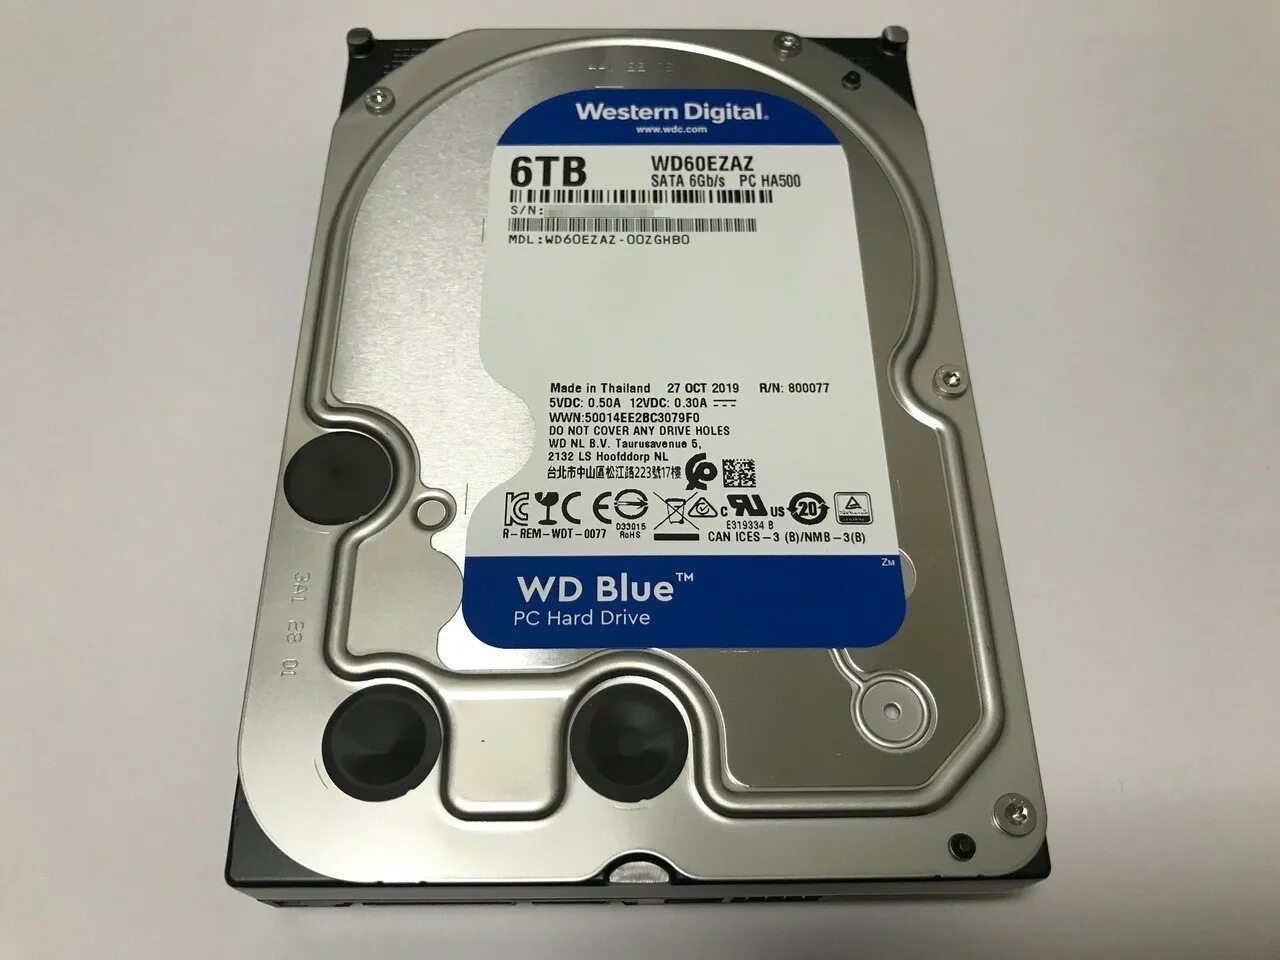 Western Digital wd60ezaz. WD wd60ezaz 6 TB. WD Blue 6tb wd60ezaz. 6 ТБ жесткий диск WD Blue.